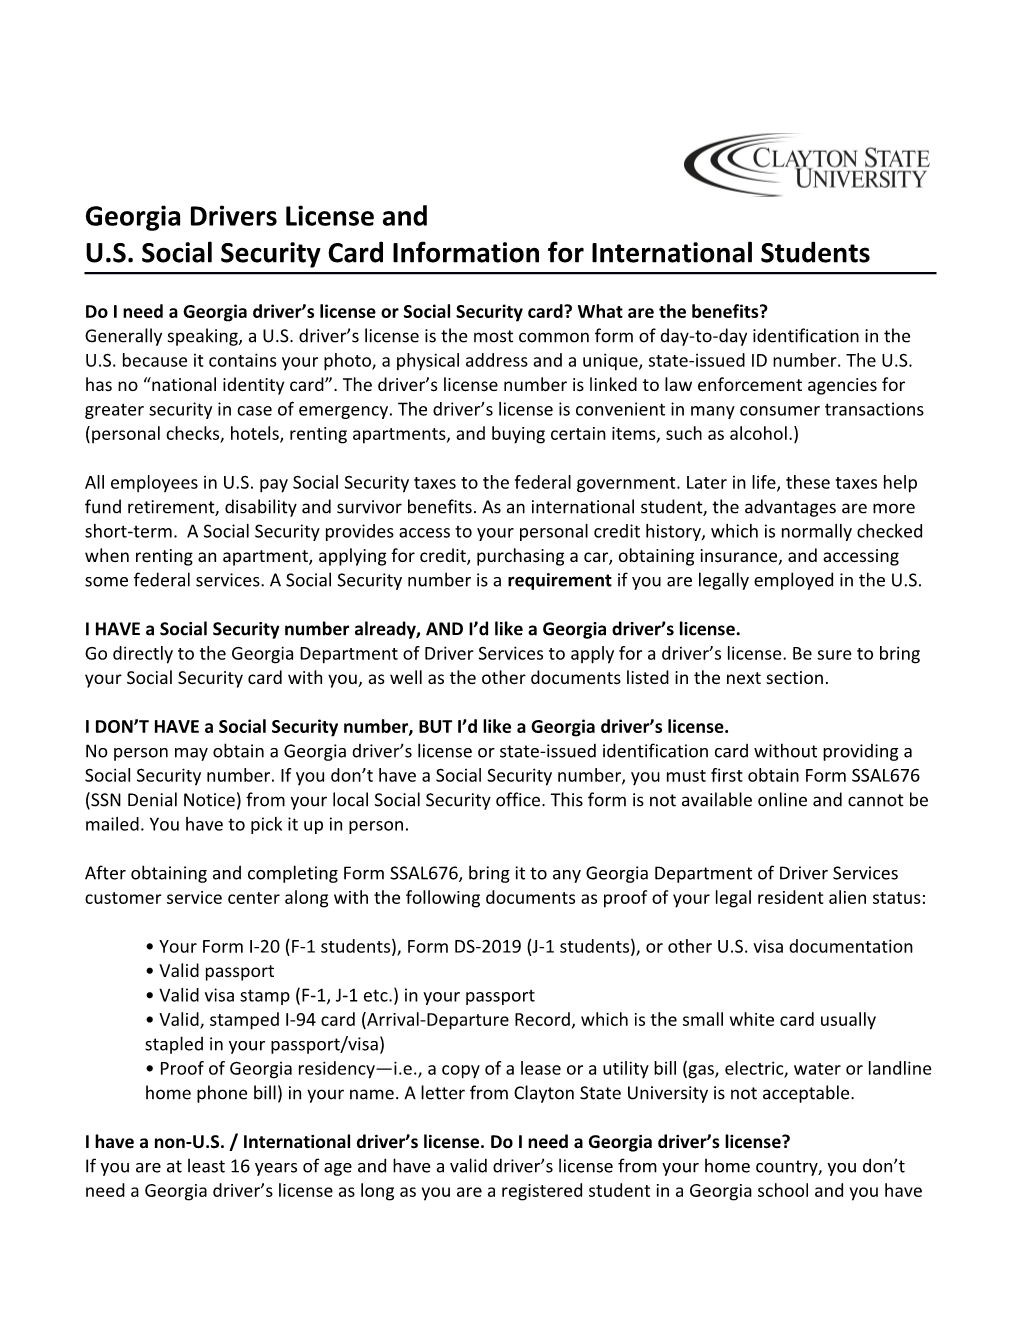 Georgia Drivers License And